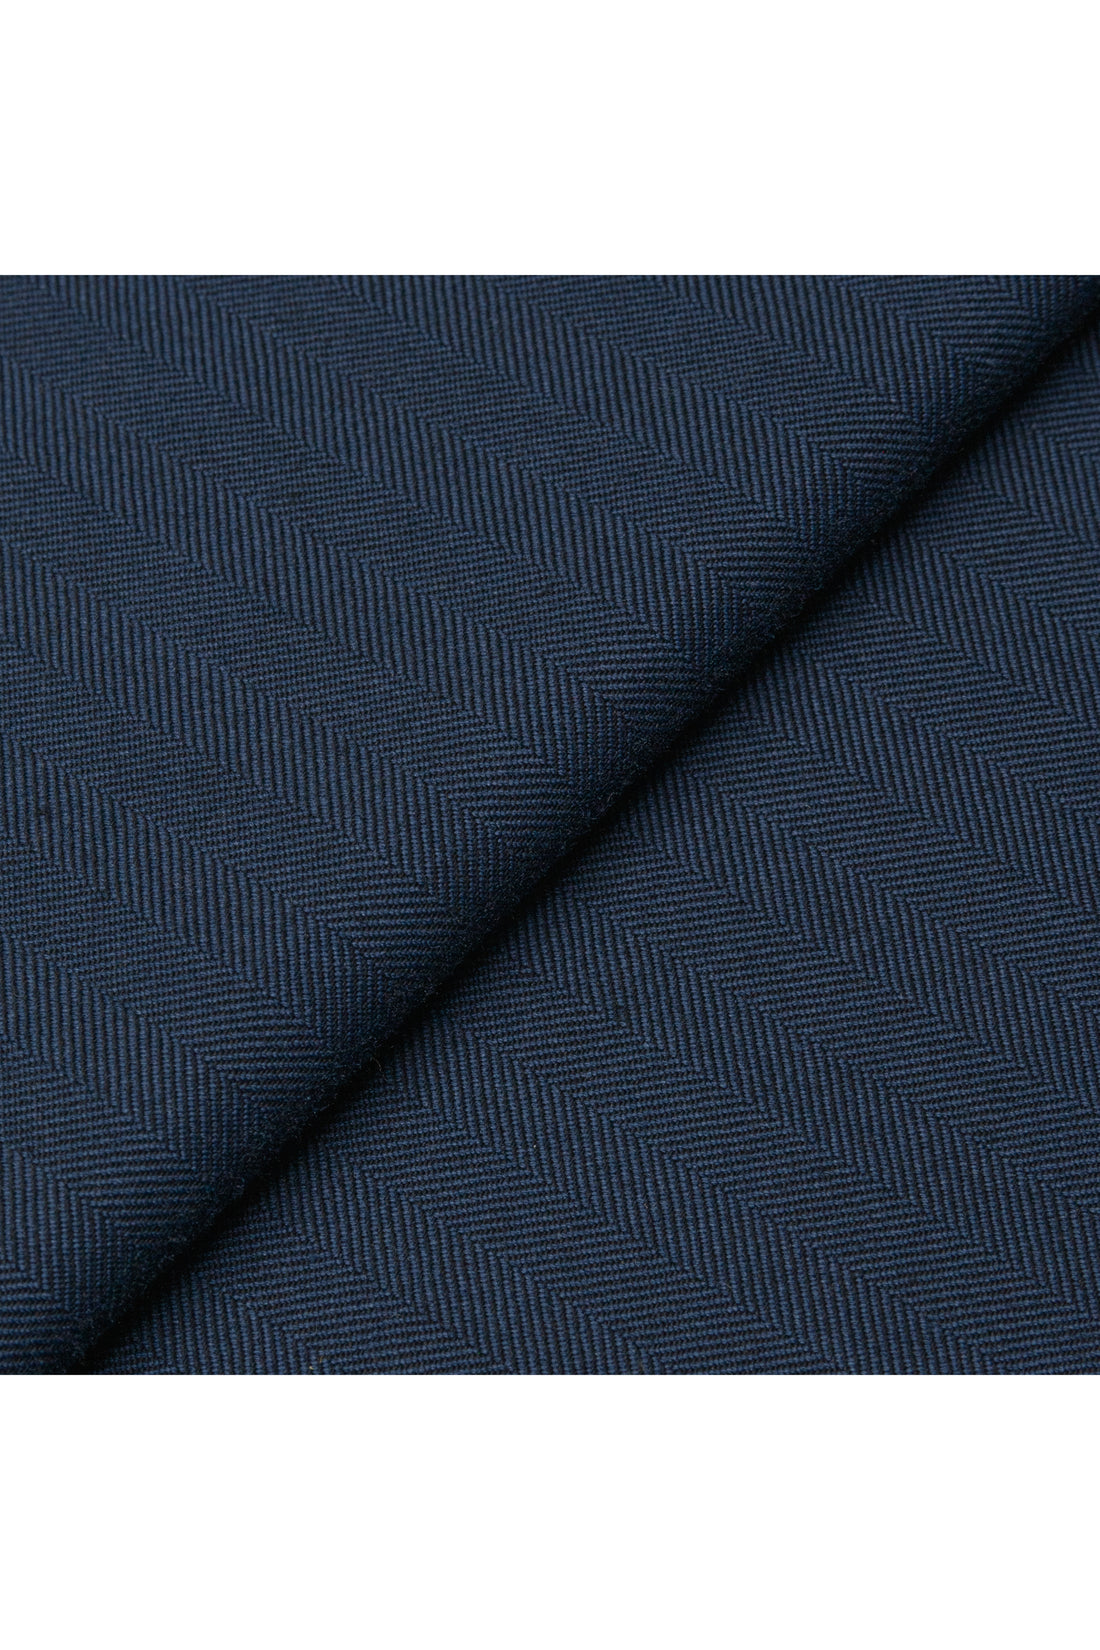 Navy Cotton Silk Herringbone Suit